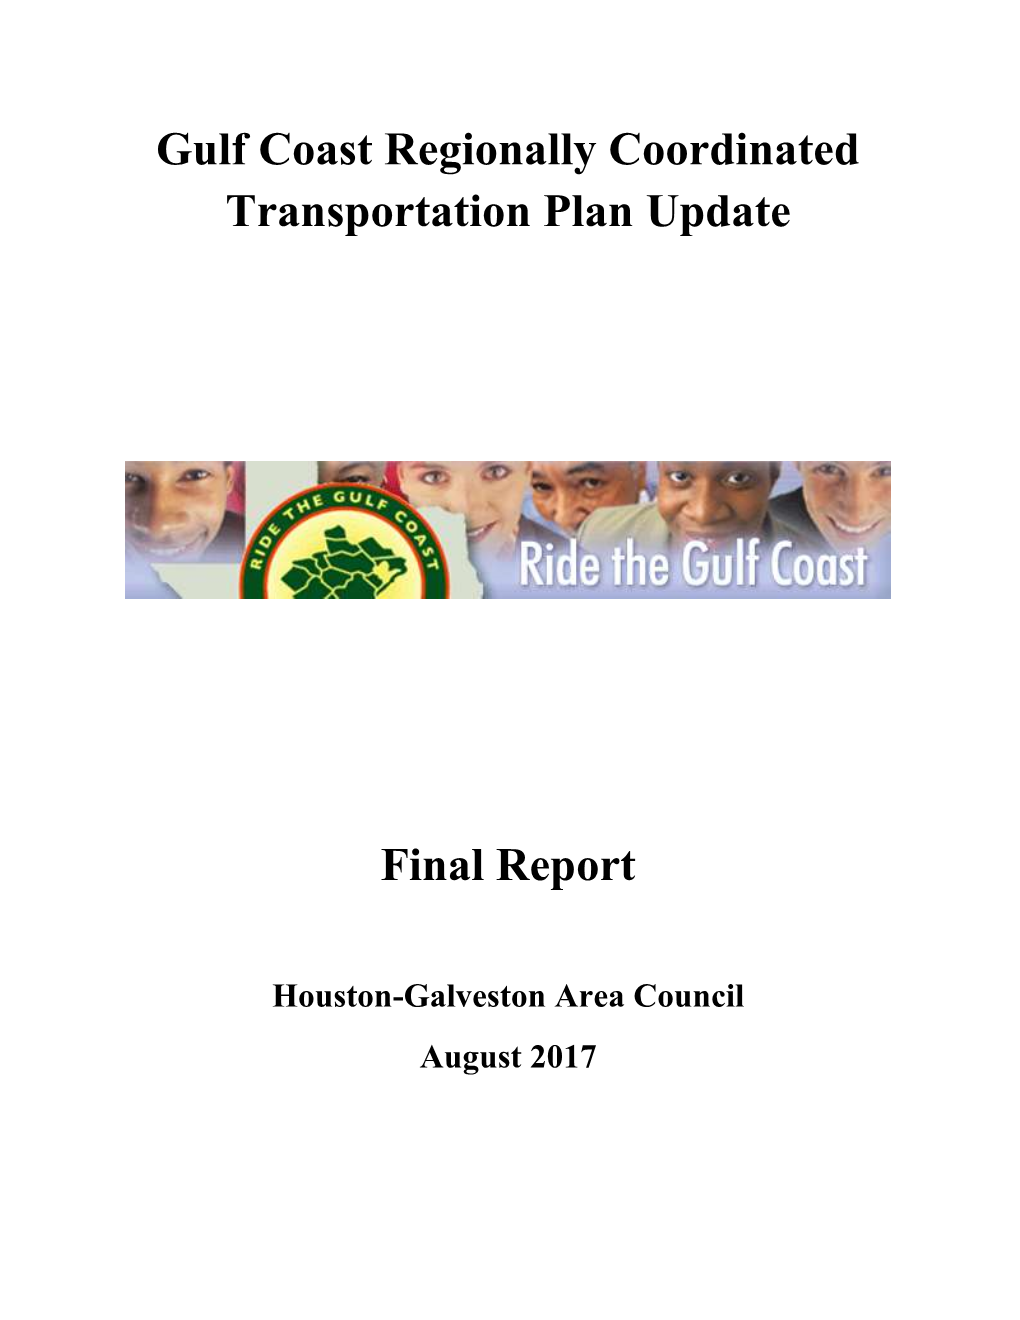 Gulf Coast Regionally Coordinated Transportation Plan Update Final